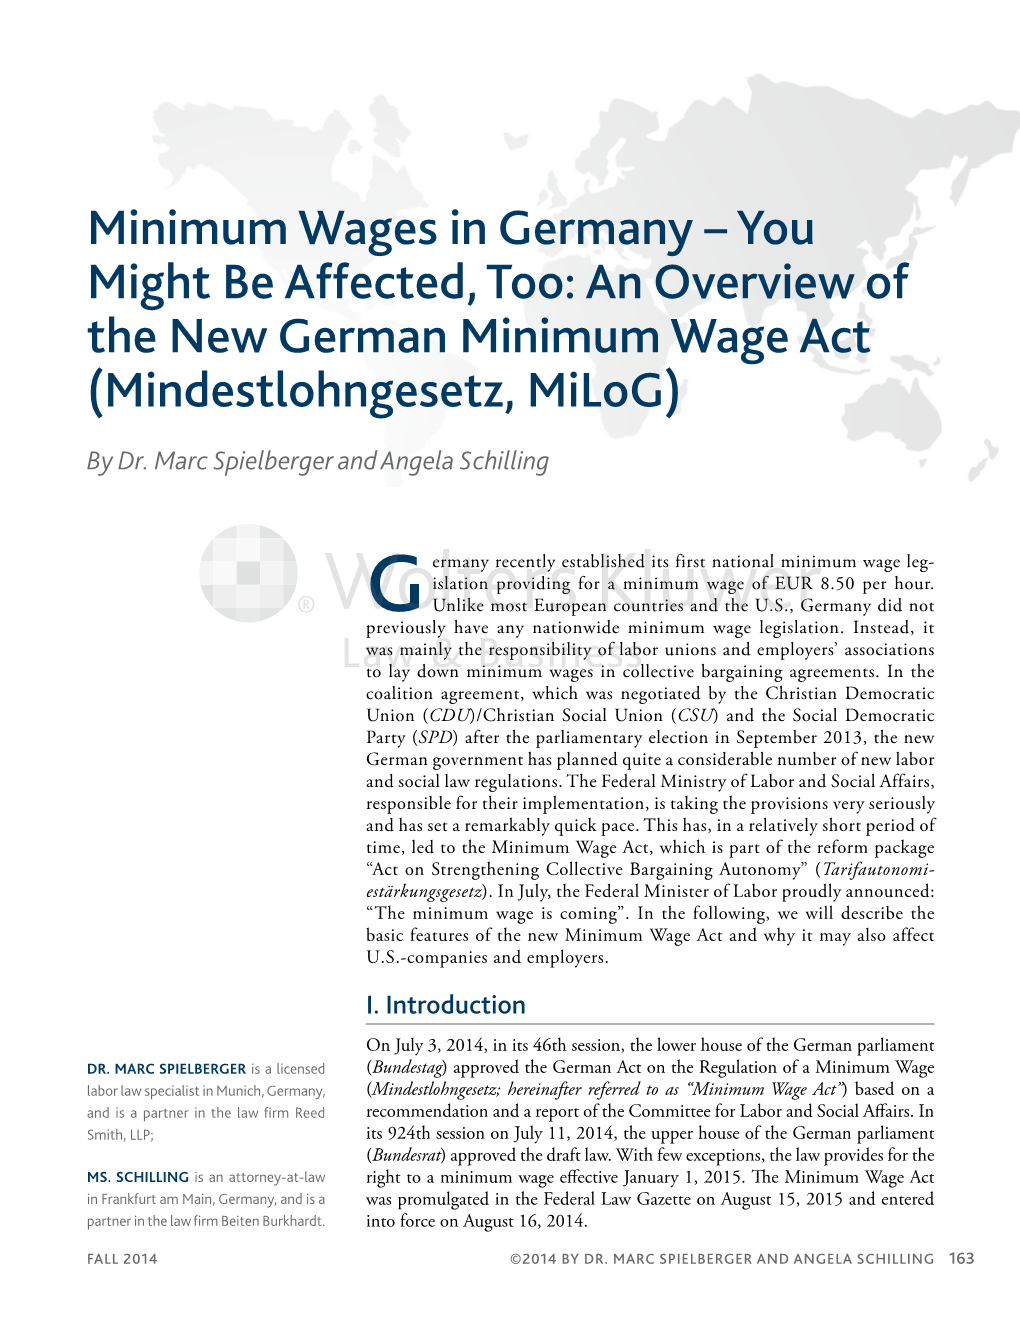 An Overview of the New German Minimum Wage Act (Mindestlohngesetz, Milog)